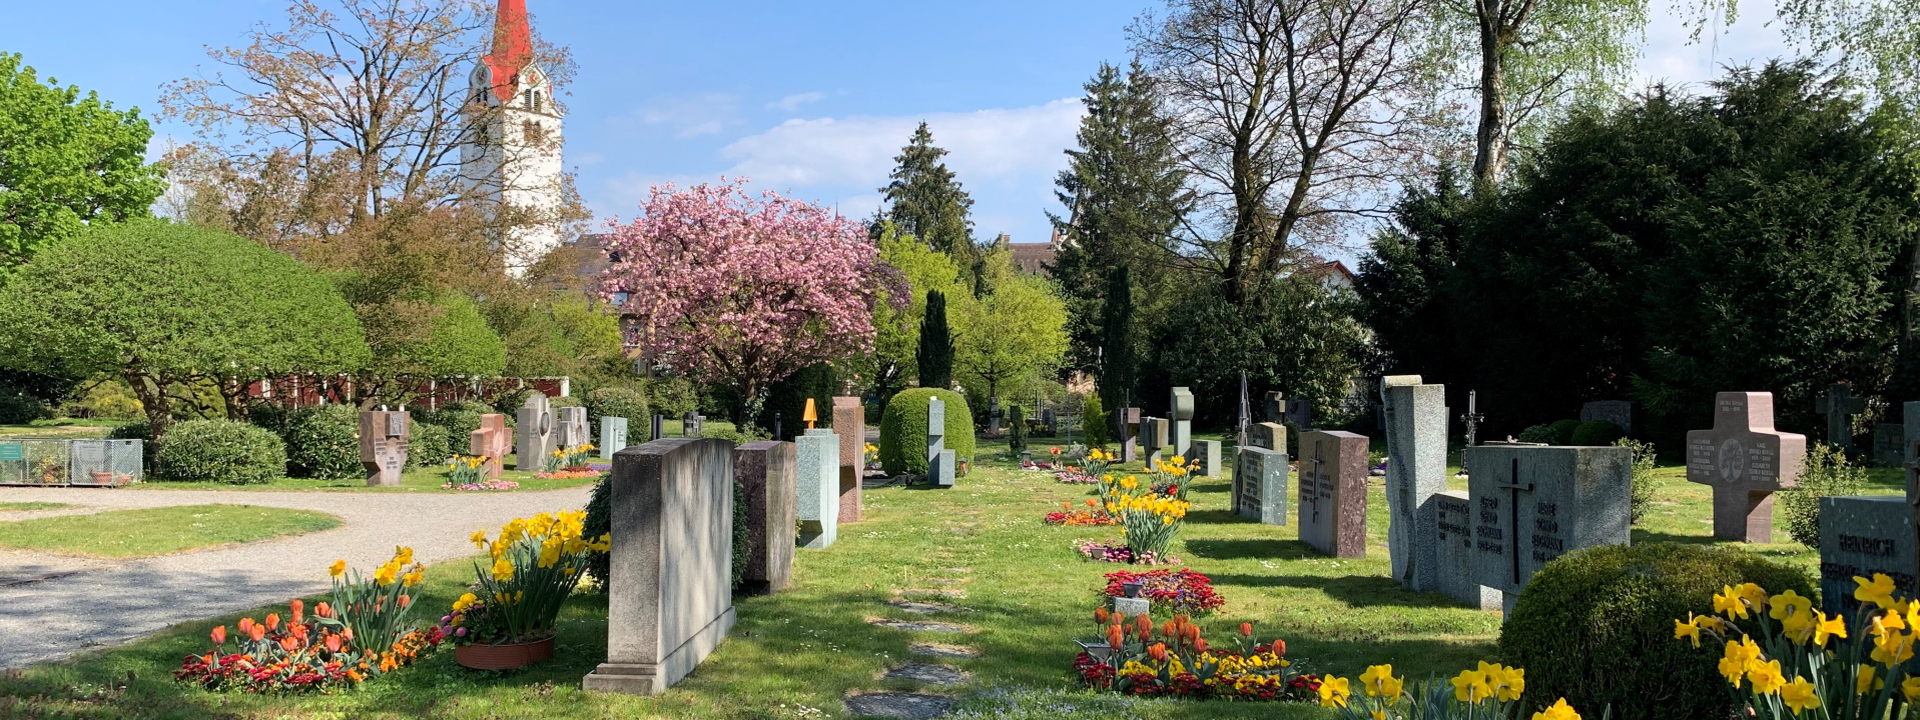 Blick zu den Familiengräber auf dem Friedhof Bremgarten